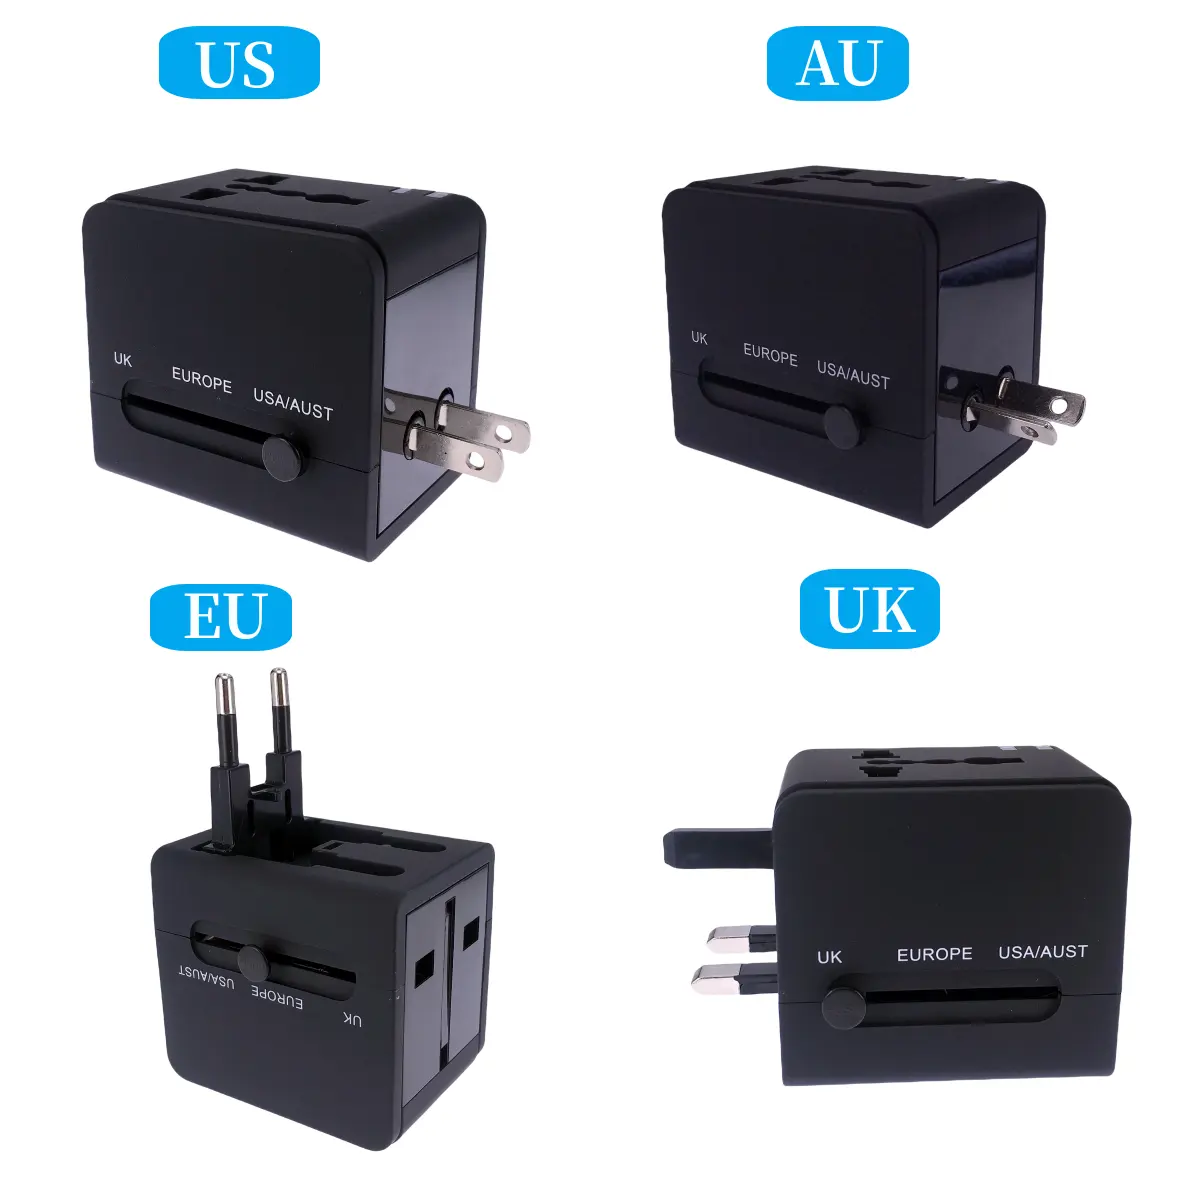 All in One Universal International Plug Adapter 2 USB Port World Travel AC Power Charger Adaptor with AU US UK EU Plug